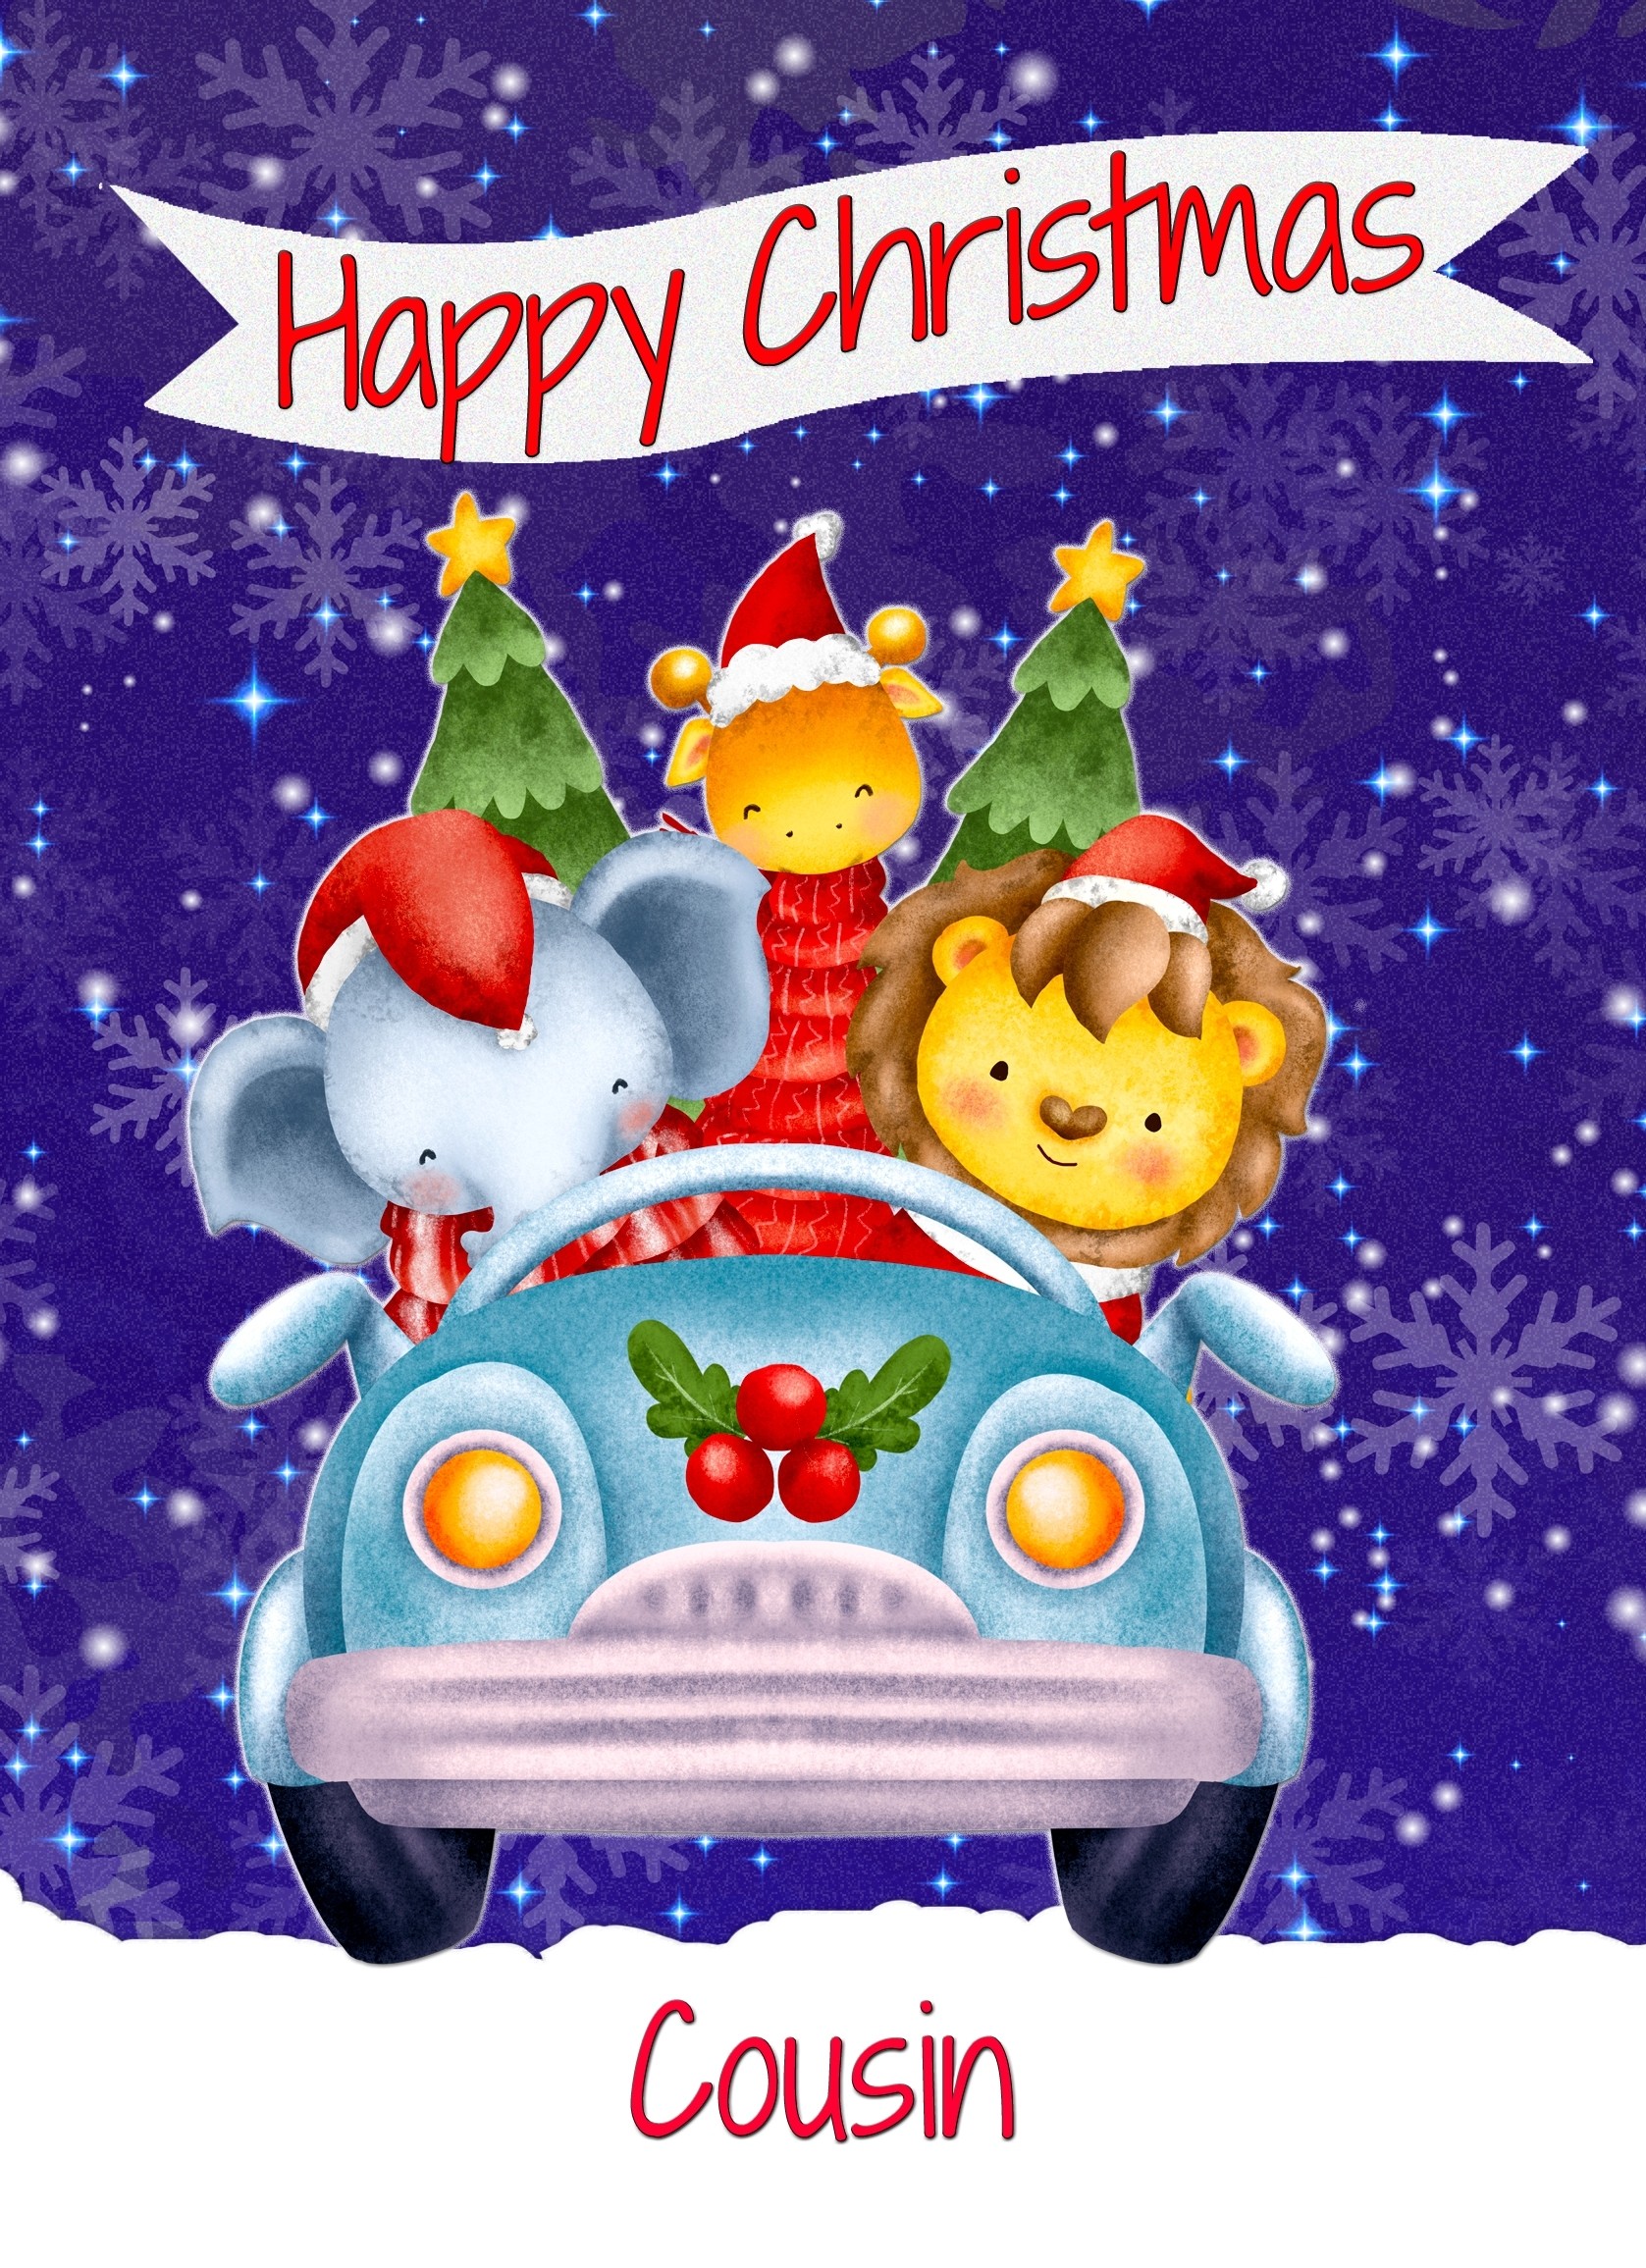 Christmas Card For Cousin (Happy Christmas, Car Animals)